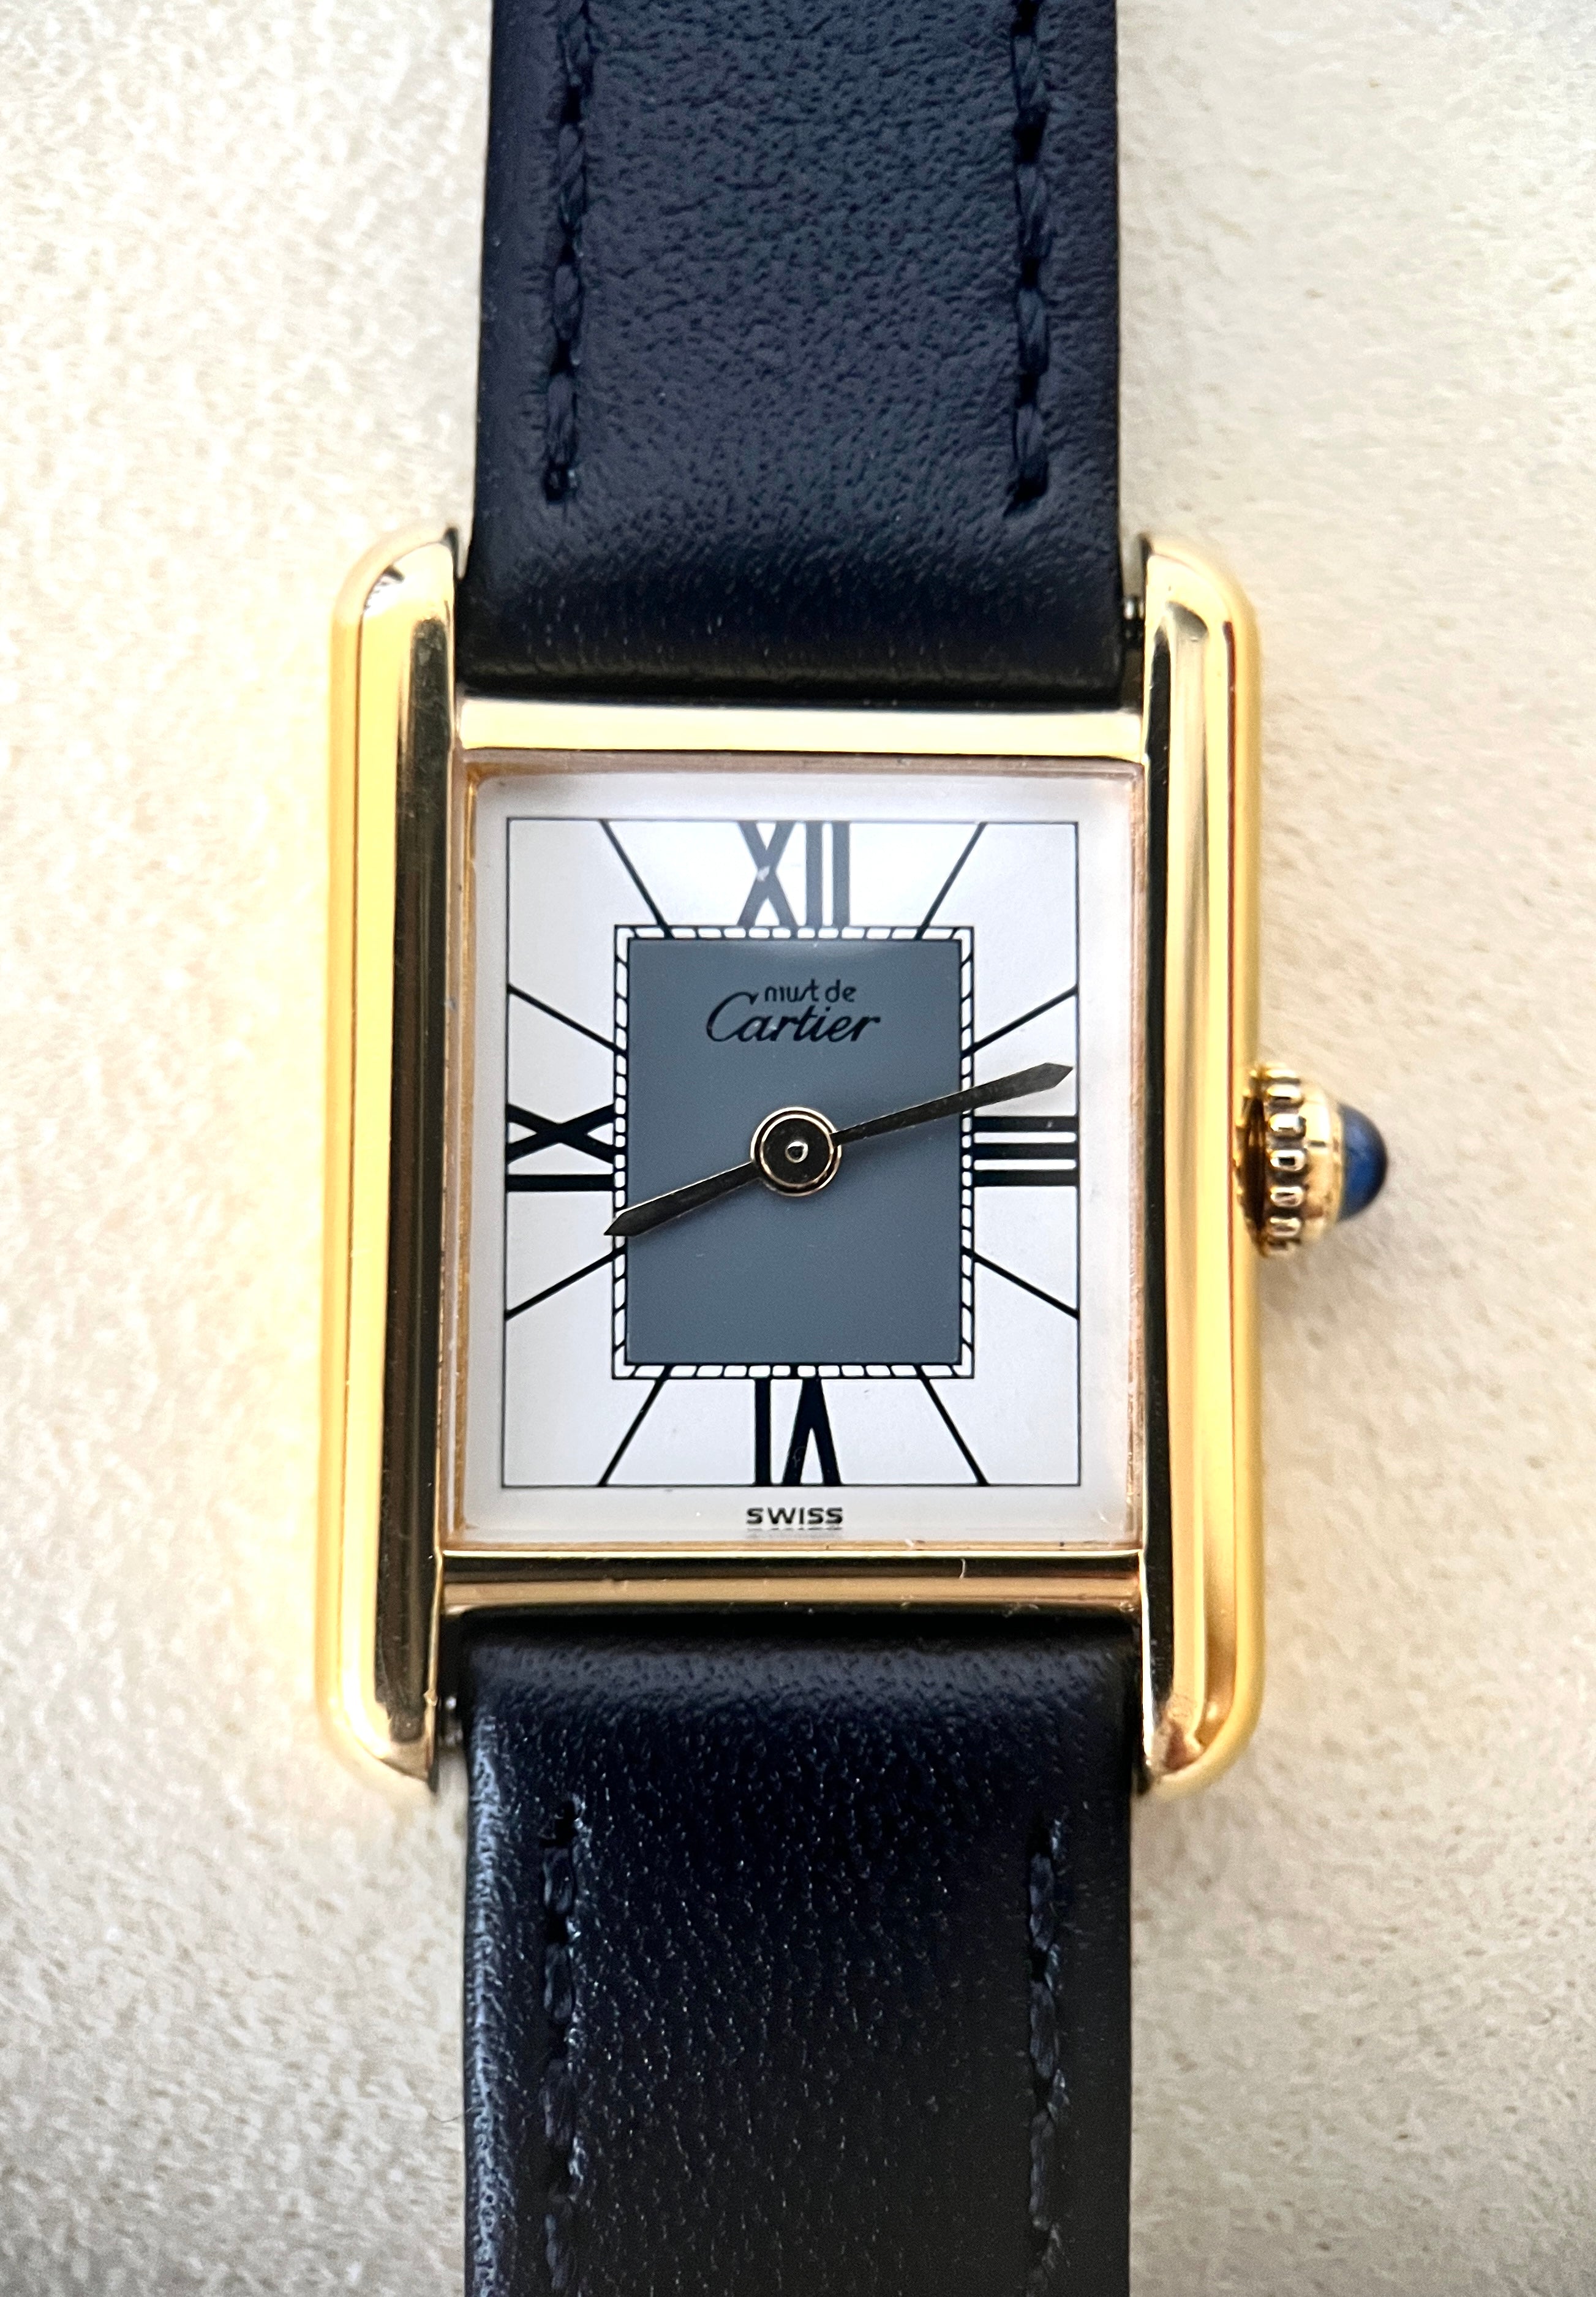 Must de Cartier Tank Ladies Vintage Watch, Size SM, Sterling Silver with 18K Vermeil